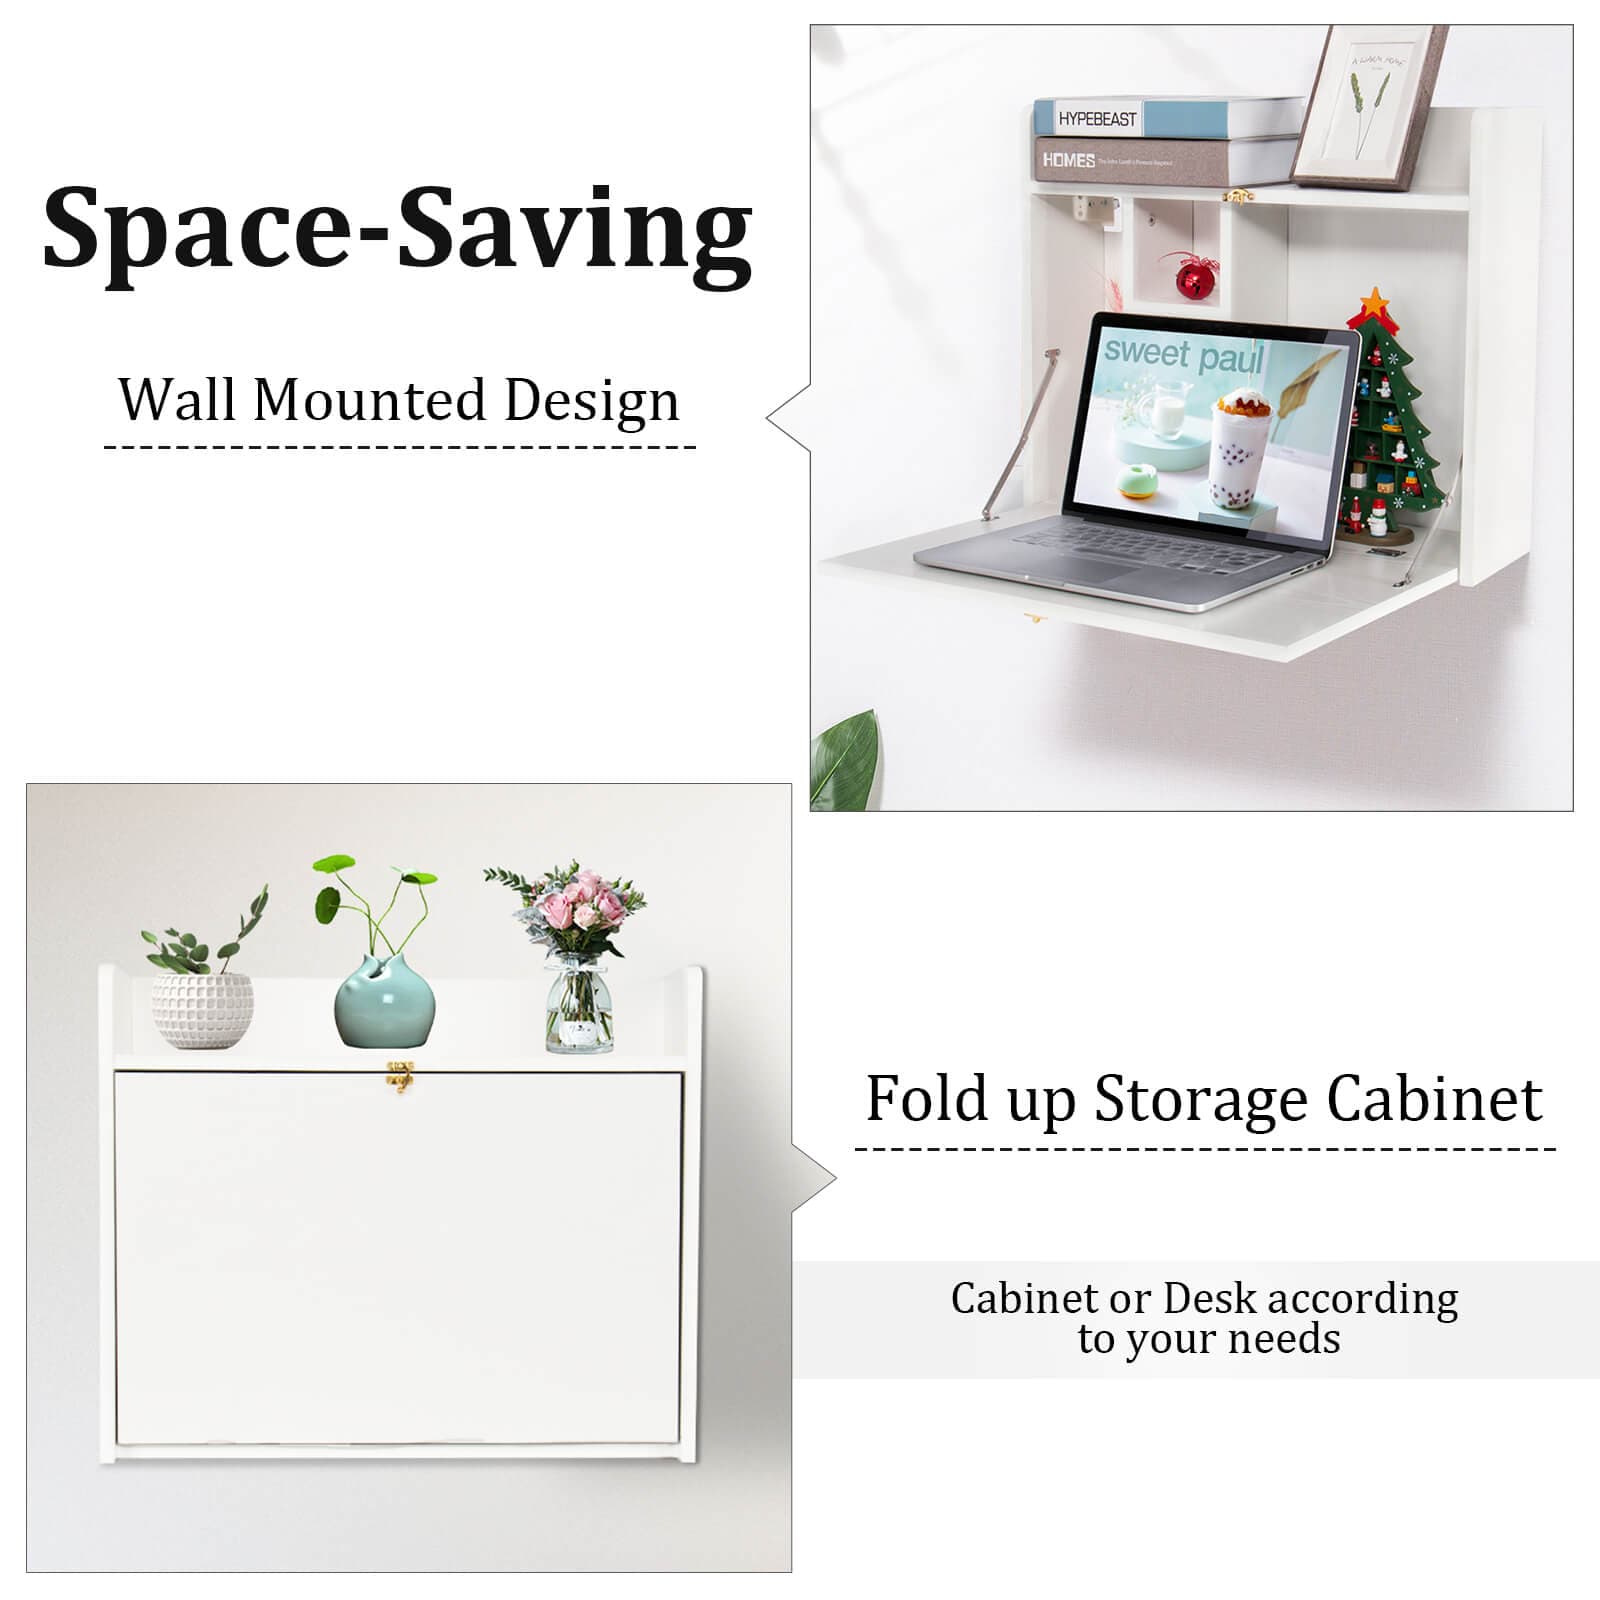 Elecwish White Wall Mounted Table Foldable Storage Shelf Wall-Mounted Desk HW1138 has space-saving